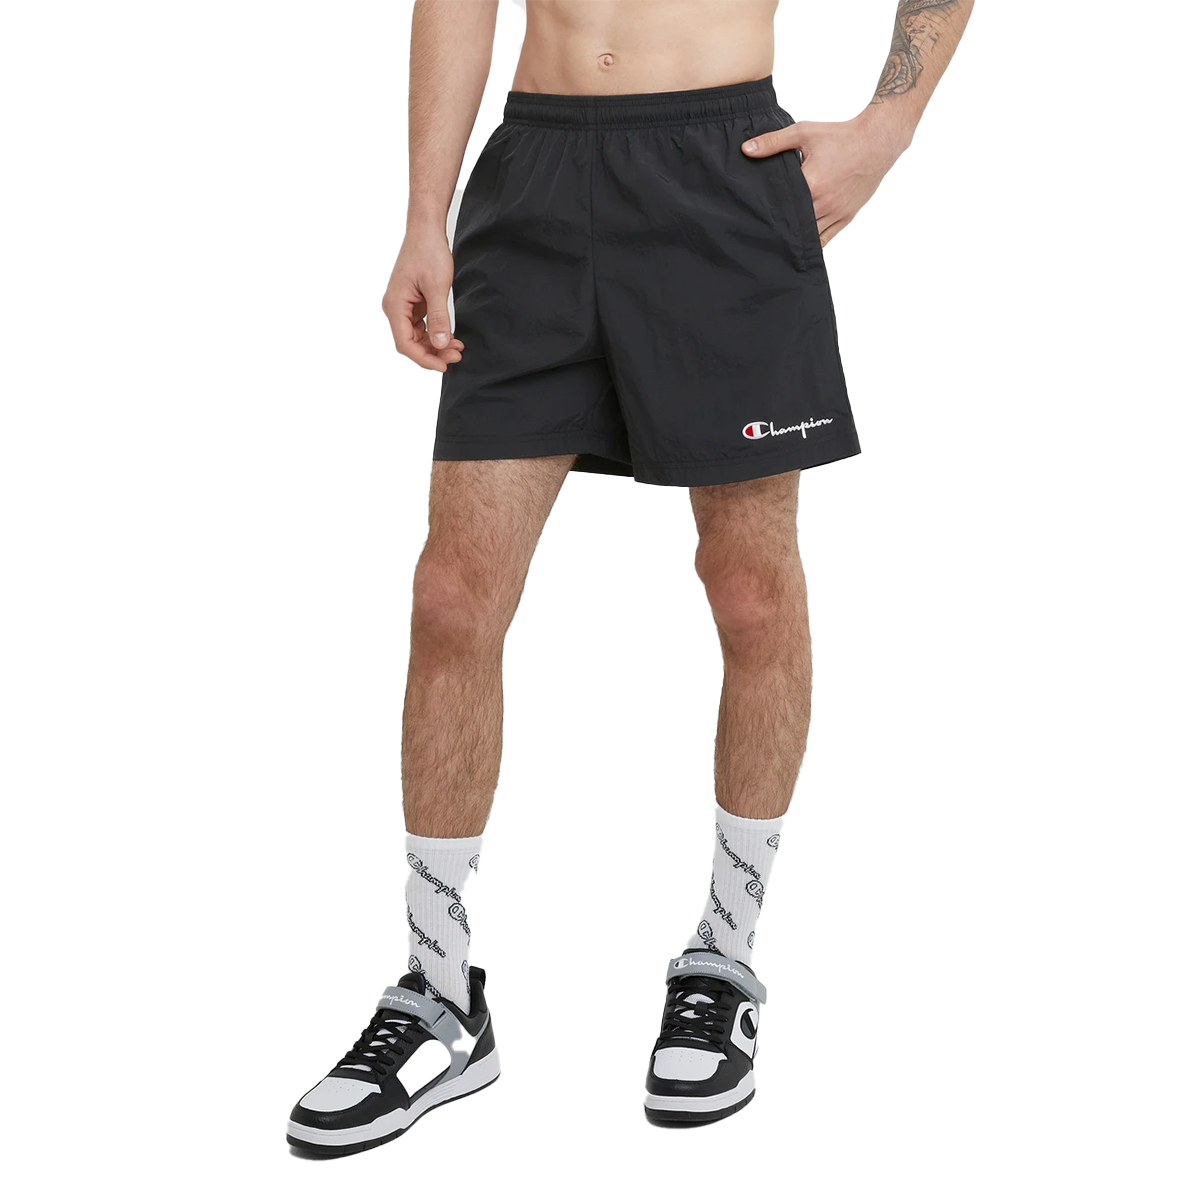 Champion Men's 6" Nylon Warm-Up Shorts with Mesh Liner